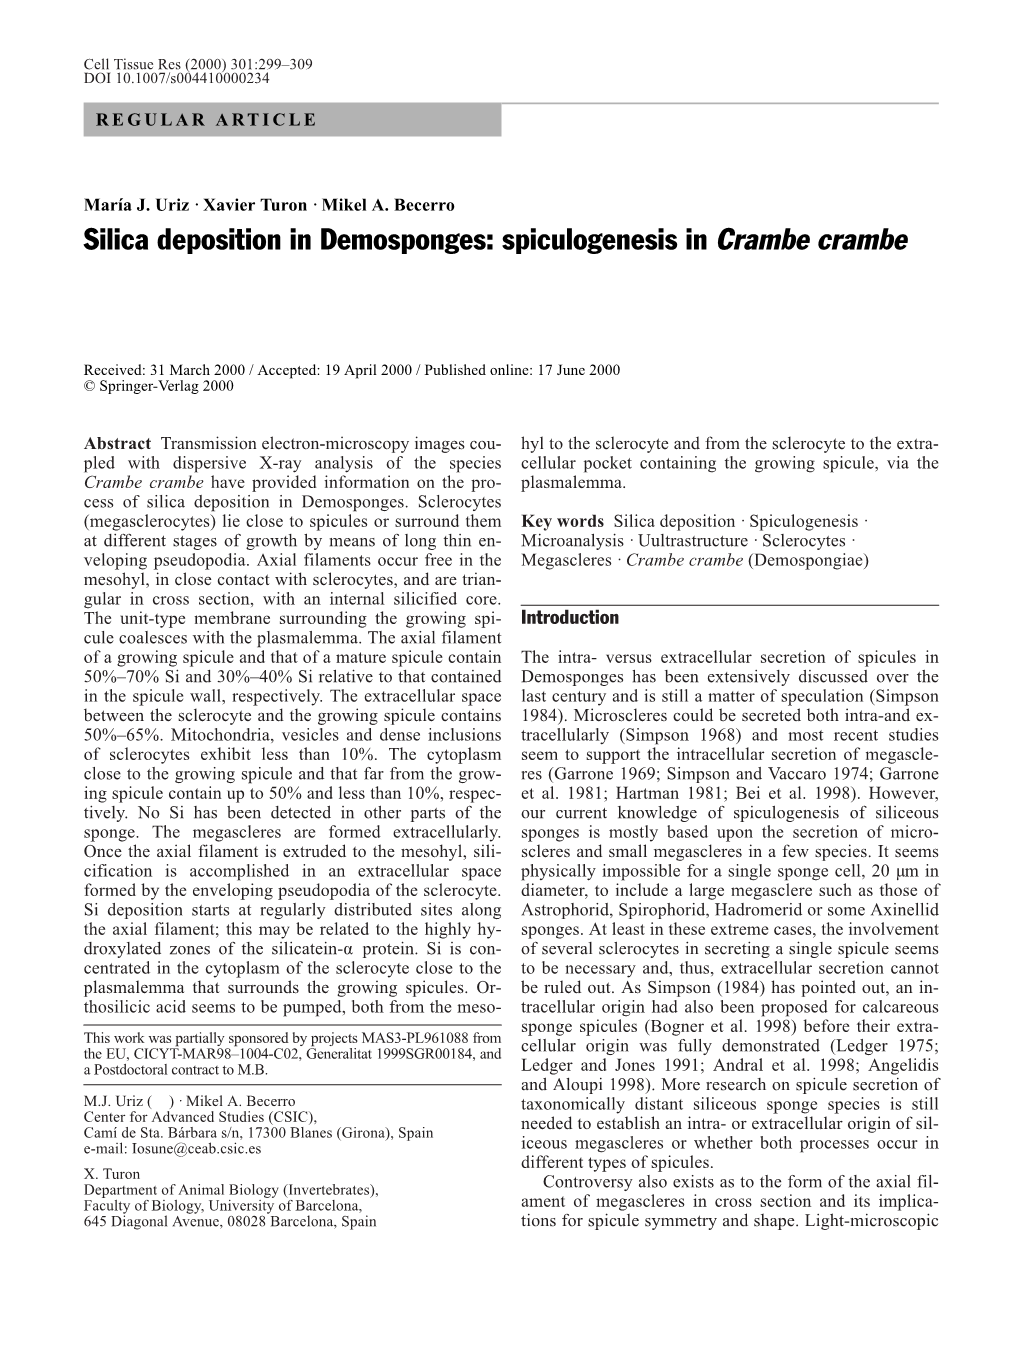 Silica Deposition in Demosponges: Spiculogenesis in Crambe Crambe